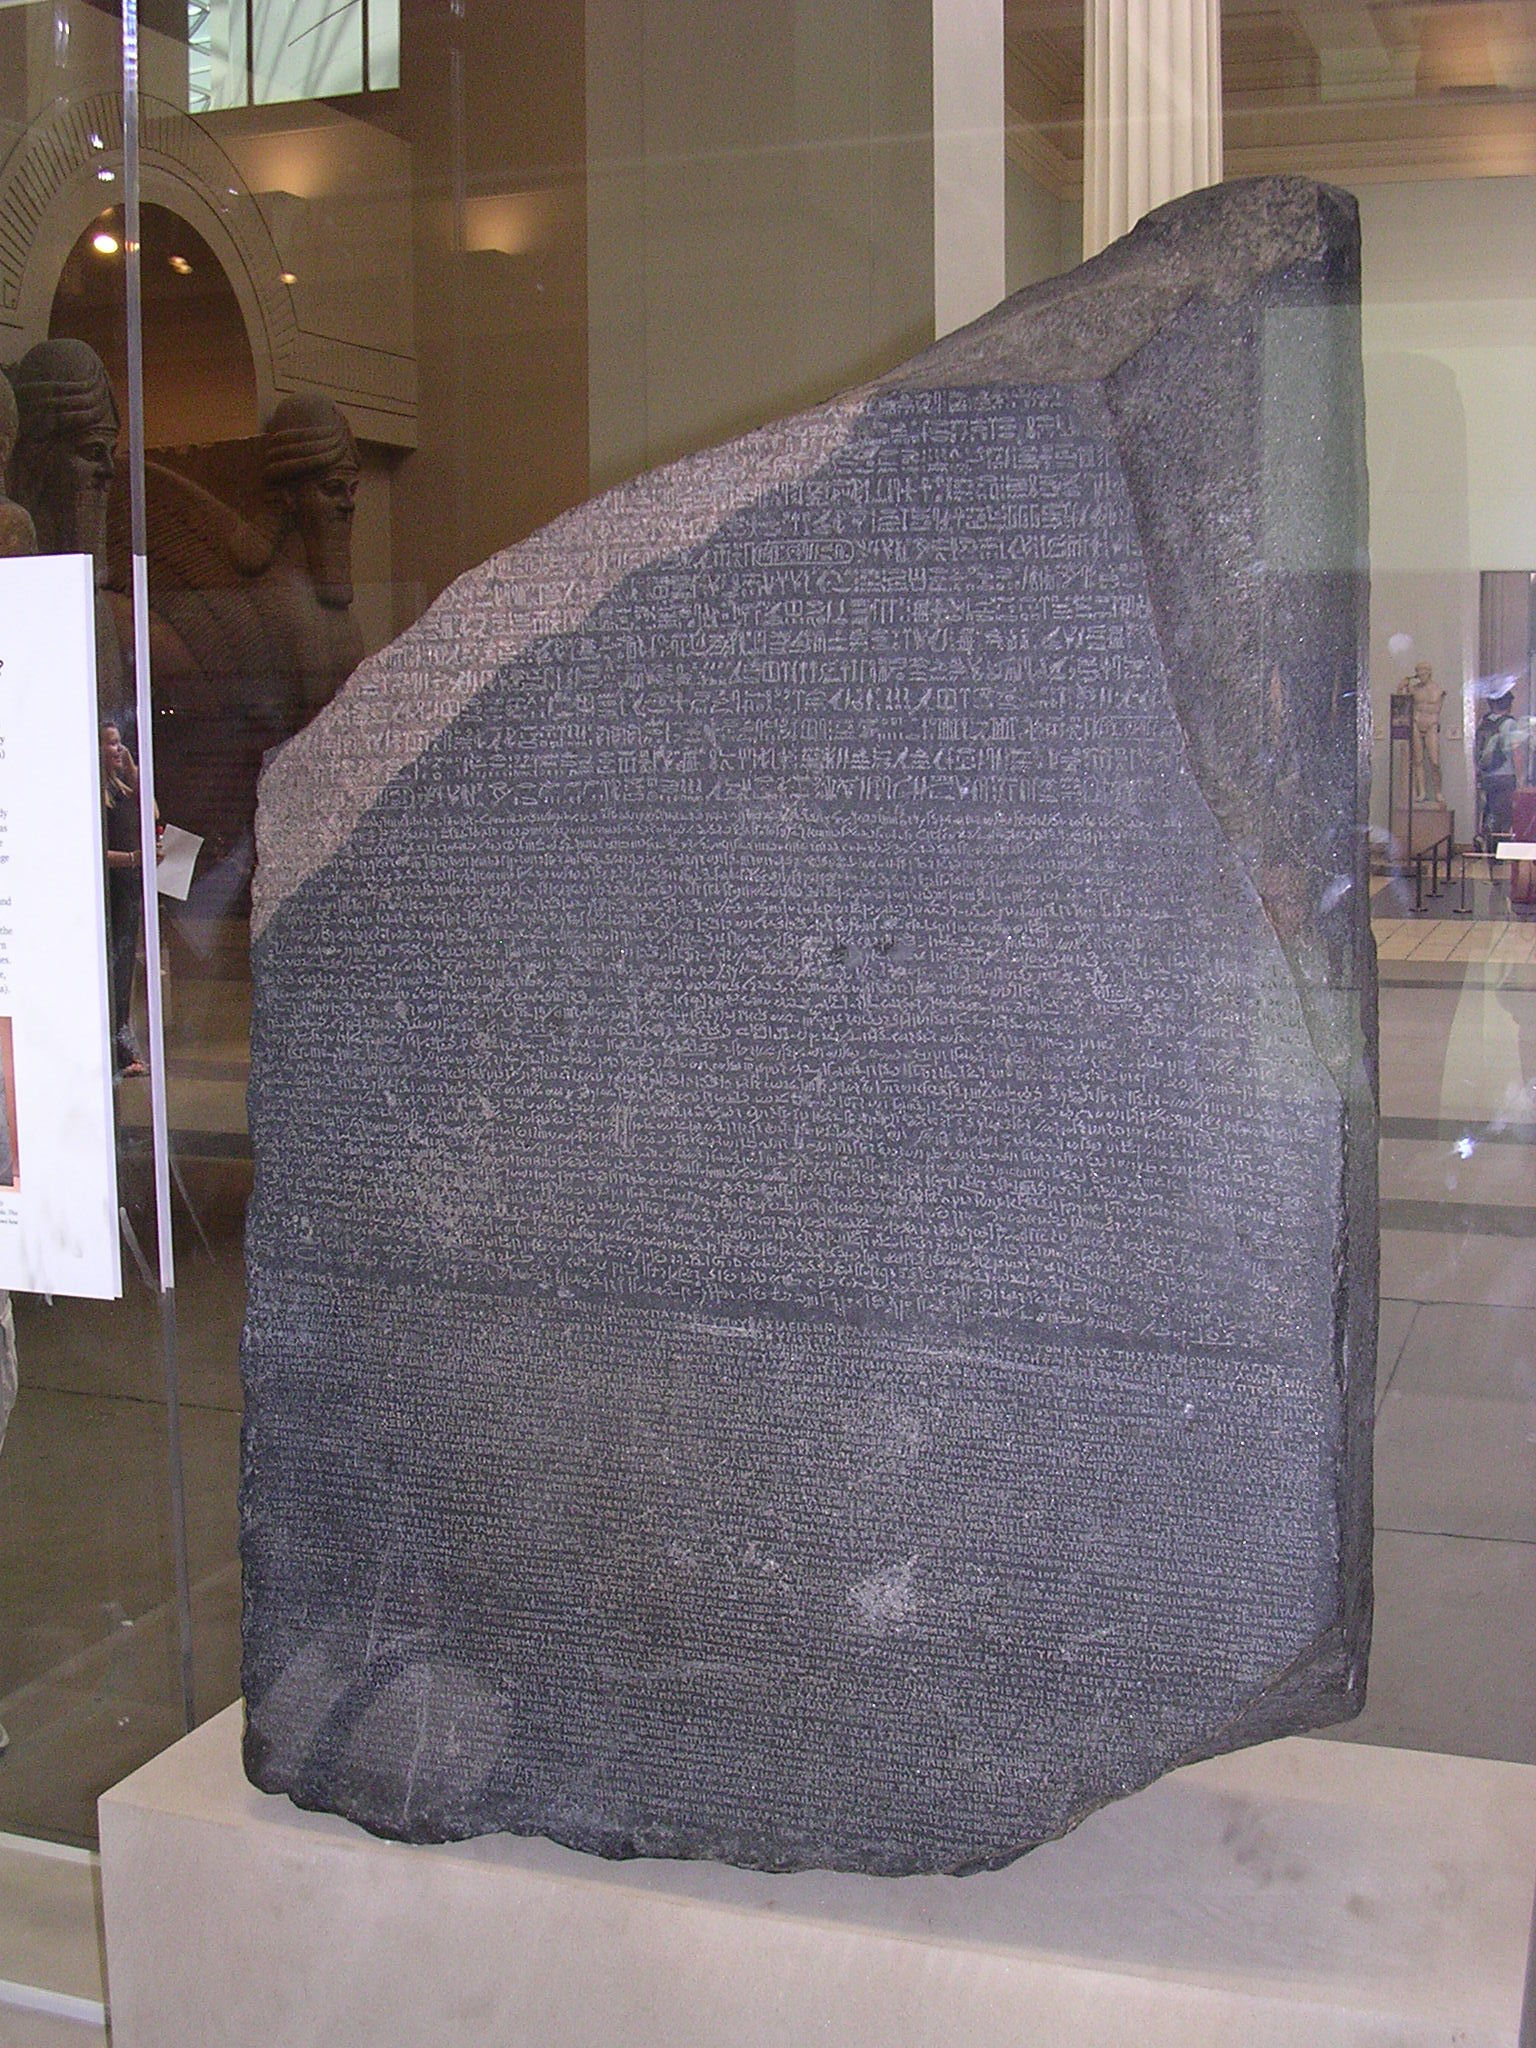 Rosetta stone french download machine